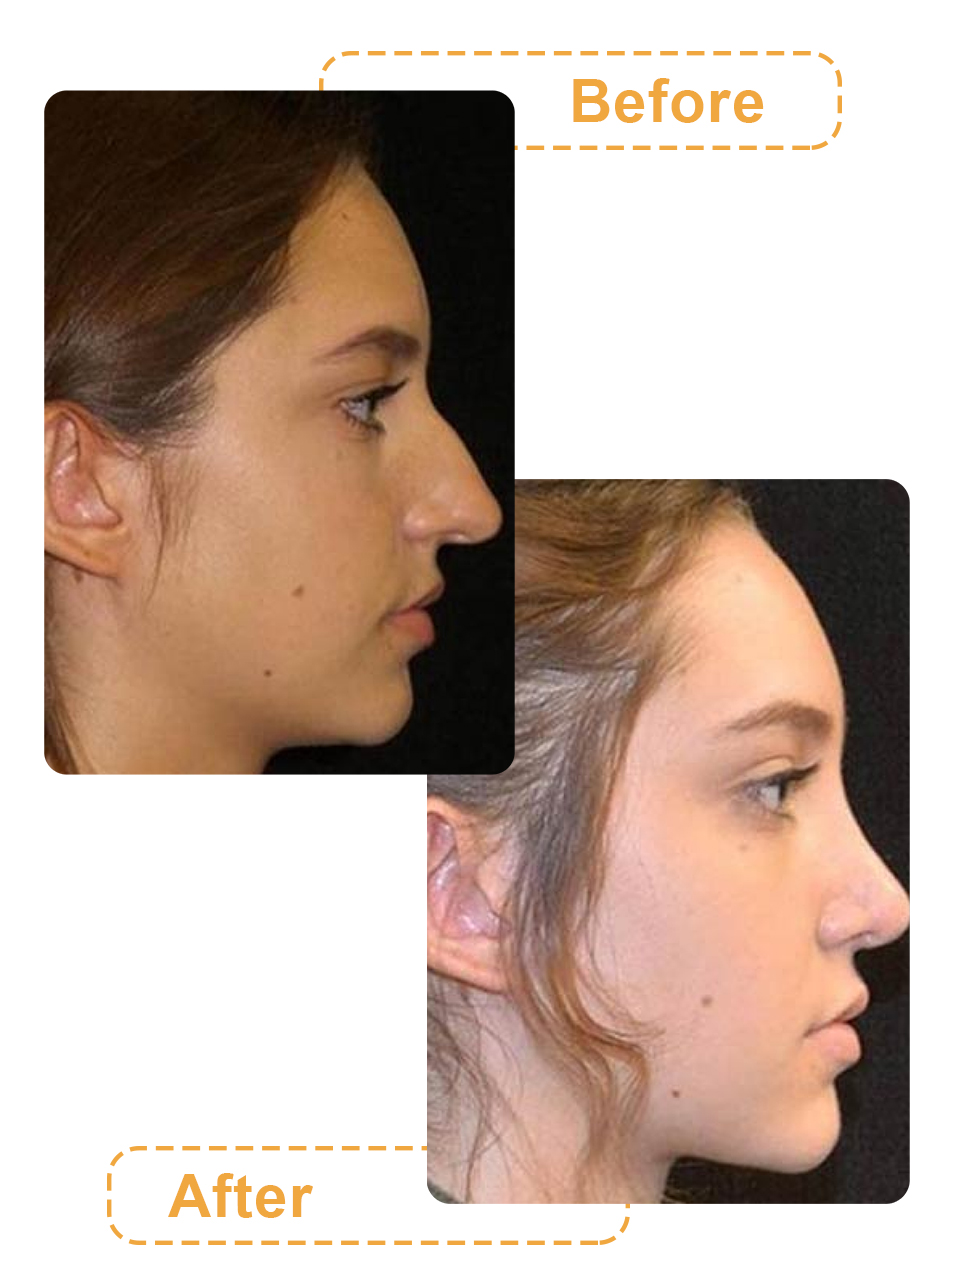 تصاویر قبل و بعد از جراحی بینی